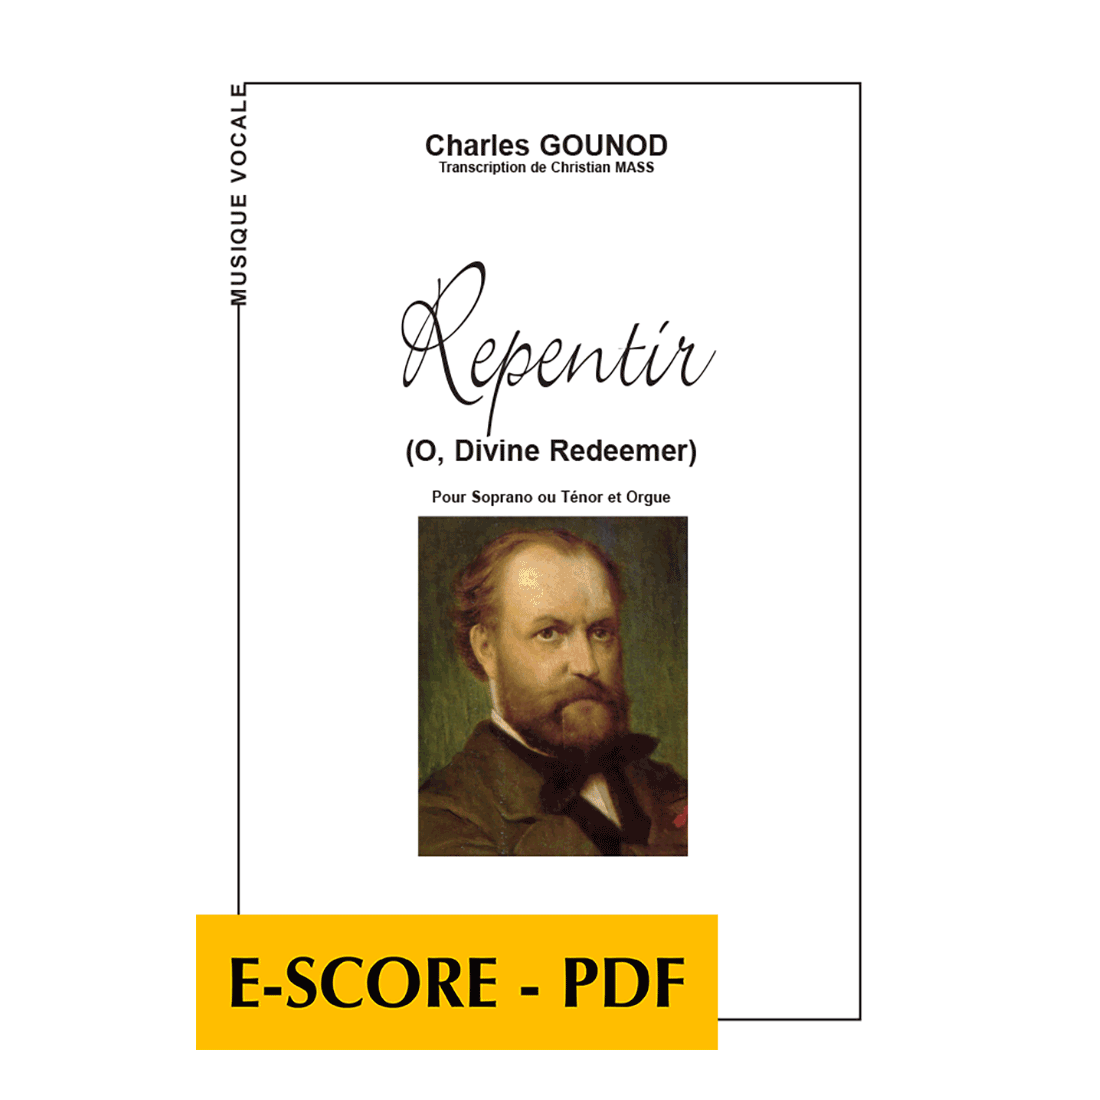 Repentir (O, Divine Redeemer) for soprano or tenor and organ - E-score PDF